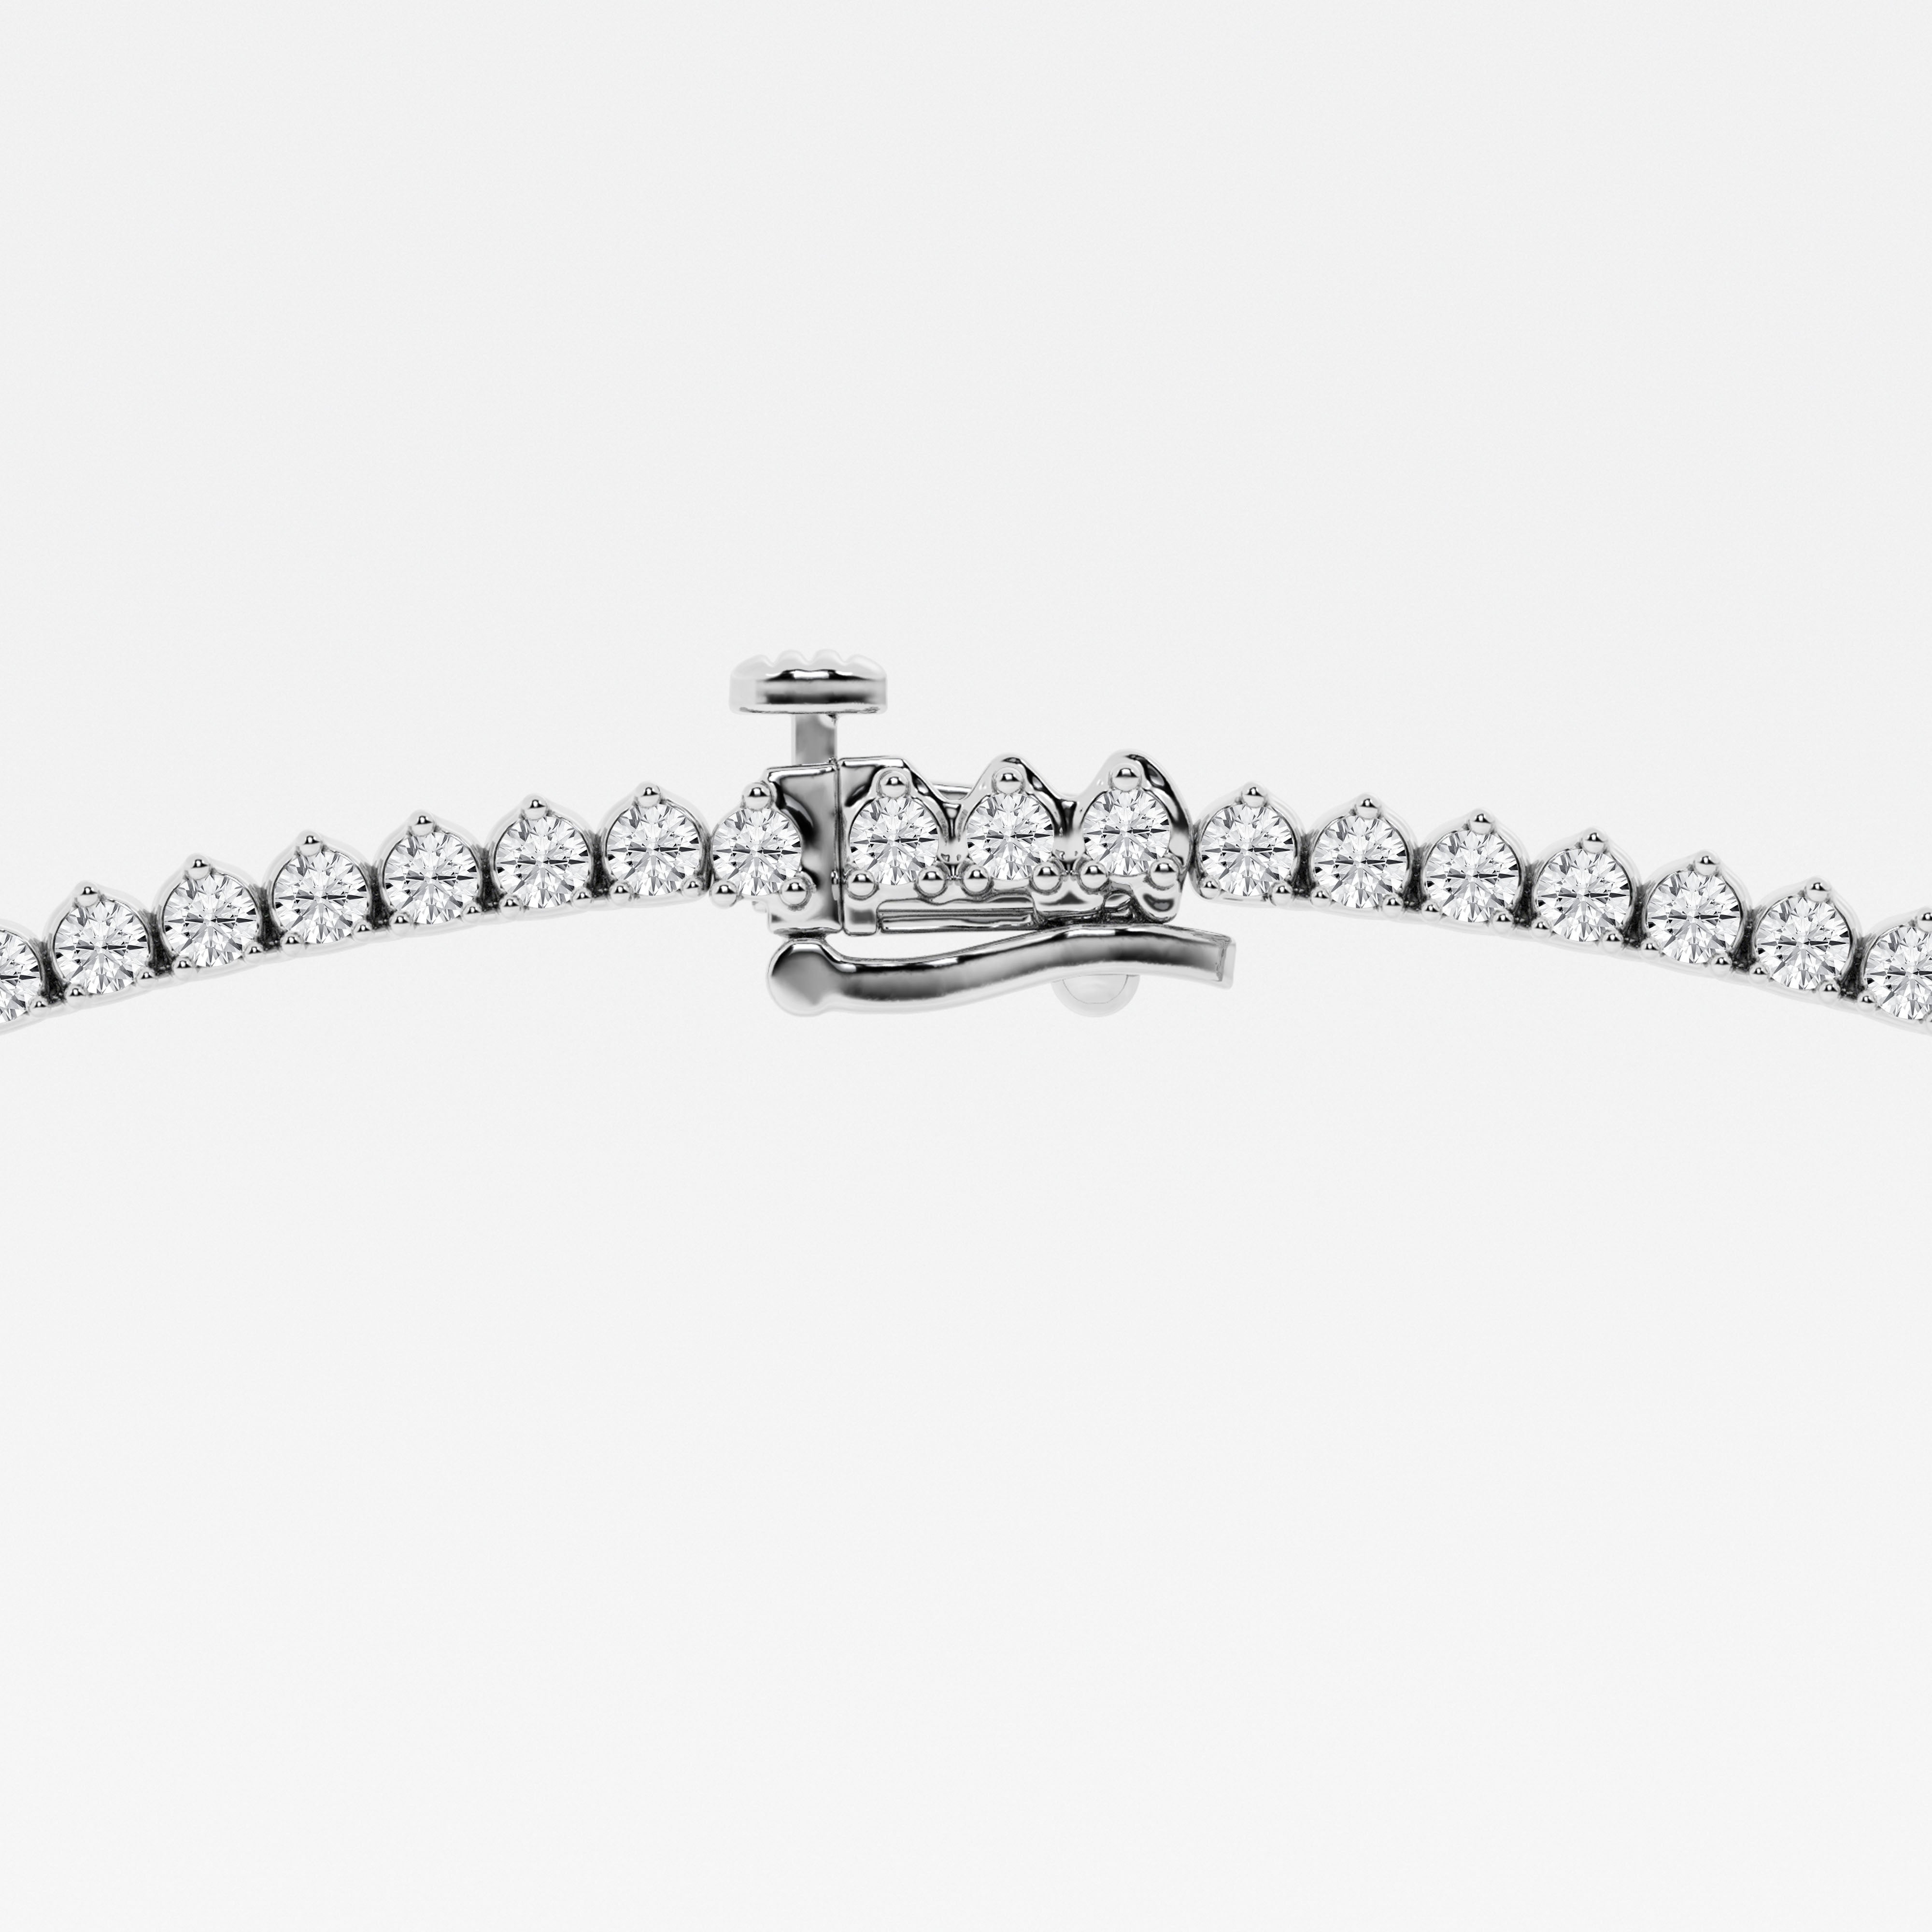 Stunning 12 Carat Diamond Ring that Set the Fashion Frenzy